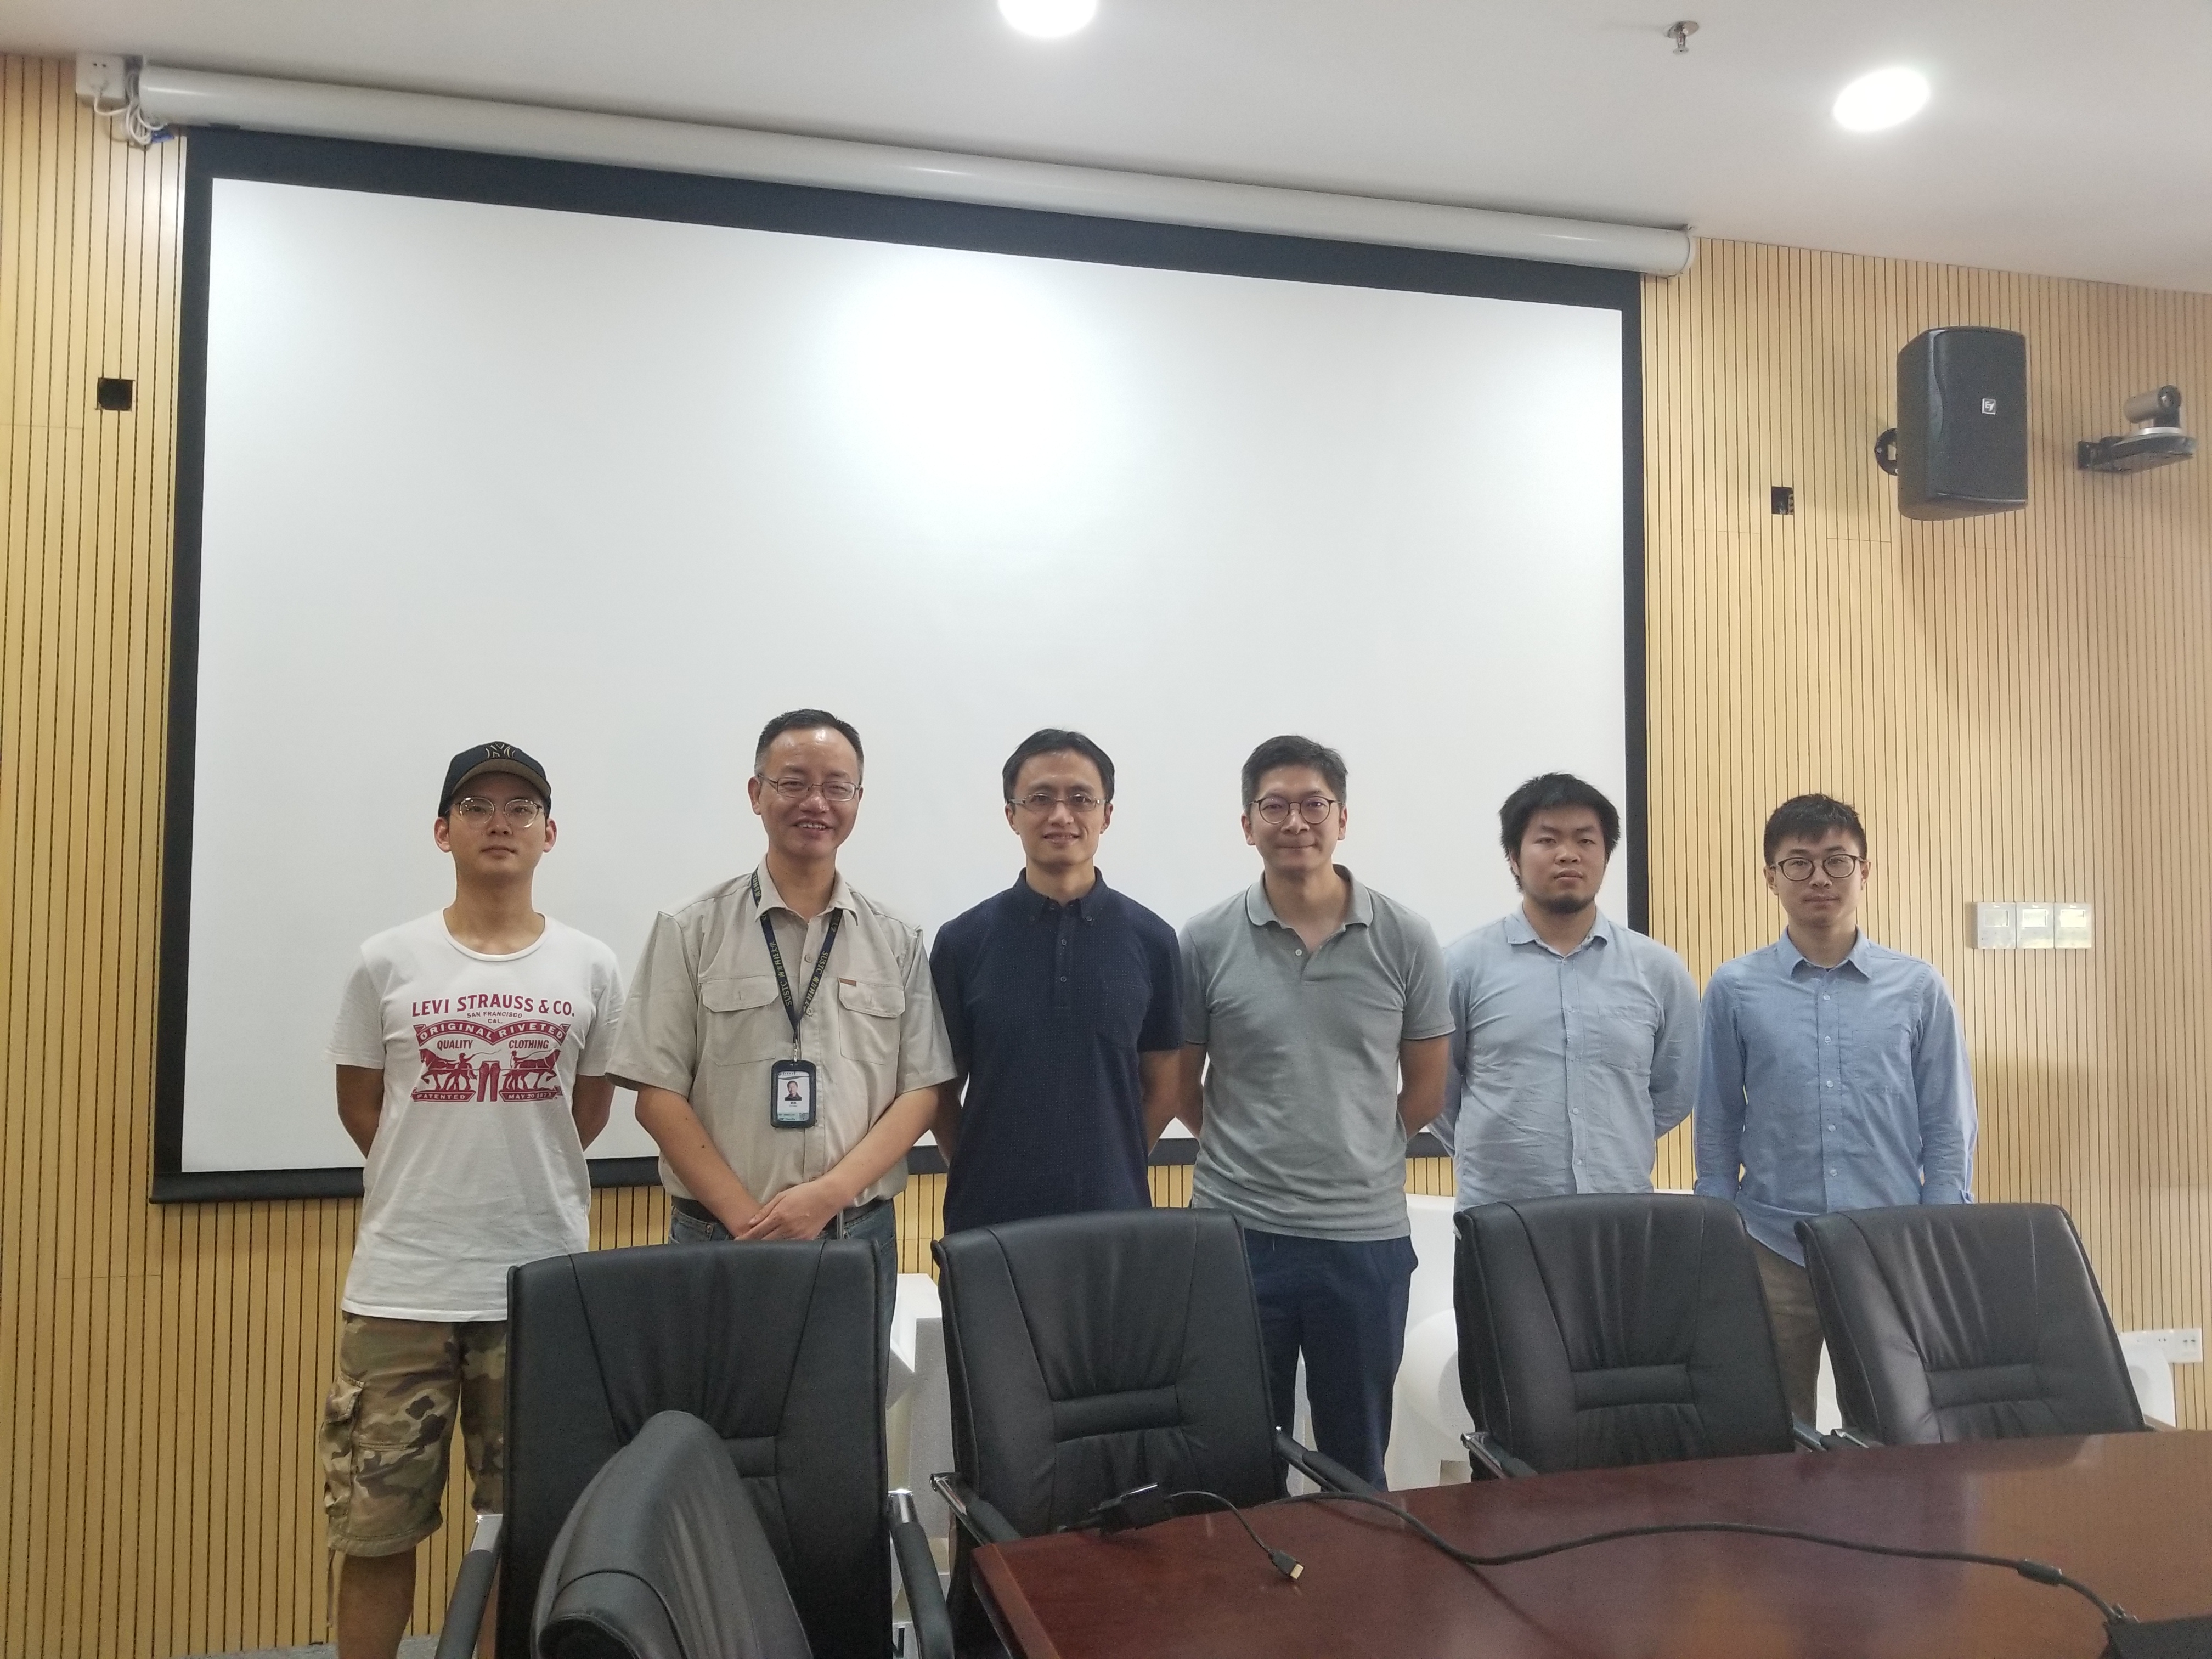 SUSTech Professor wins award at Wu Wen Jun AI Science and Technology Awards